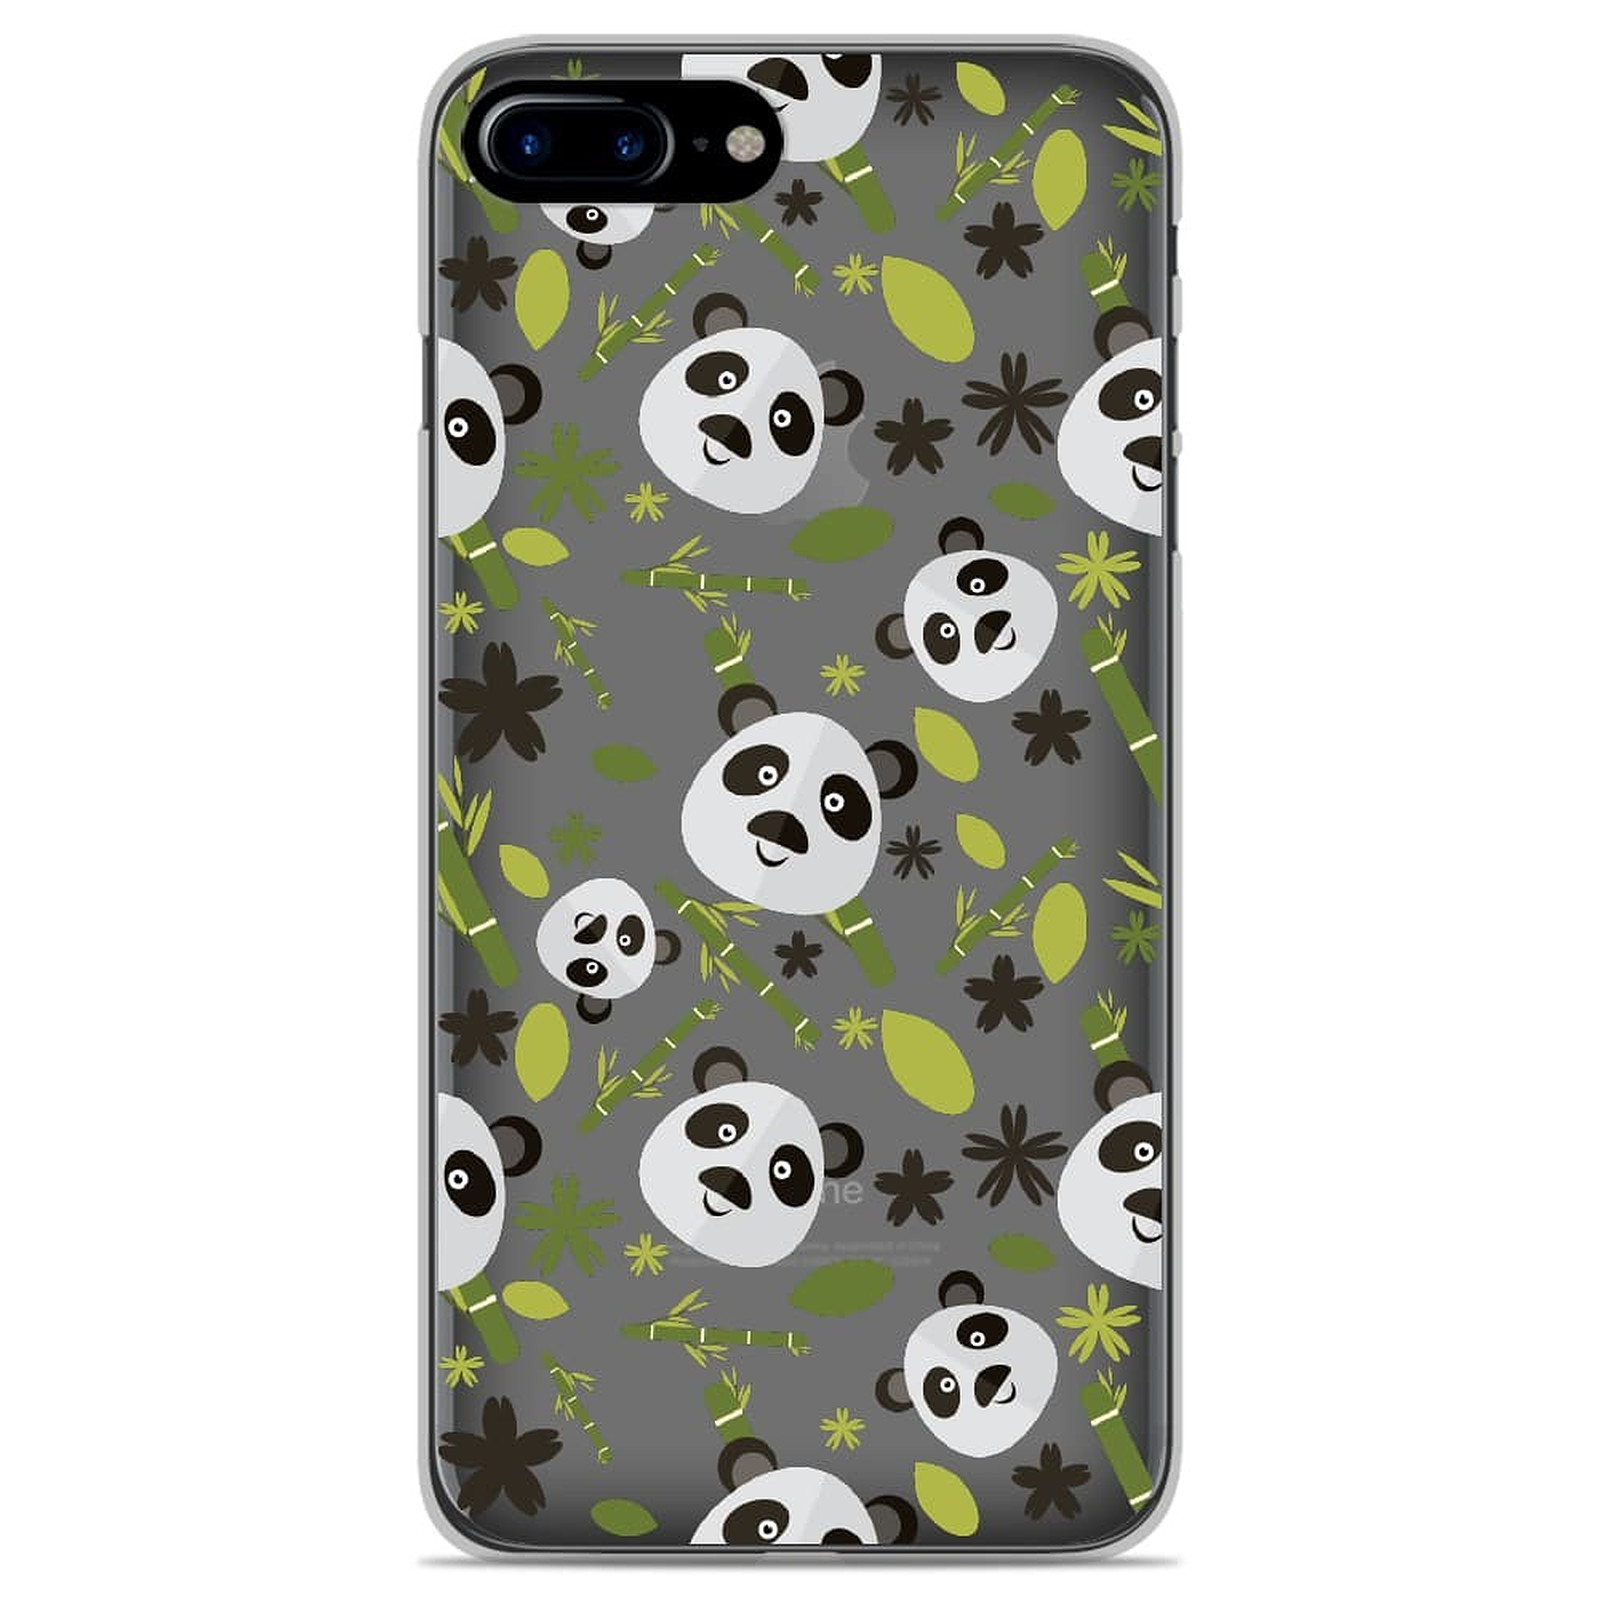 1001 Coques Coque silicone gel Apple iPhone 7 Plus motif Pandas et Bambou - Coque telephone 1001Coques